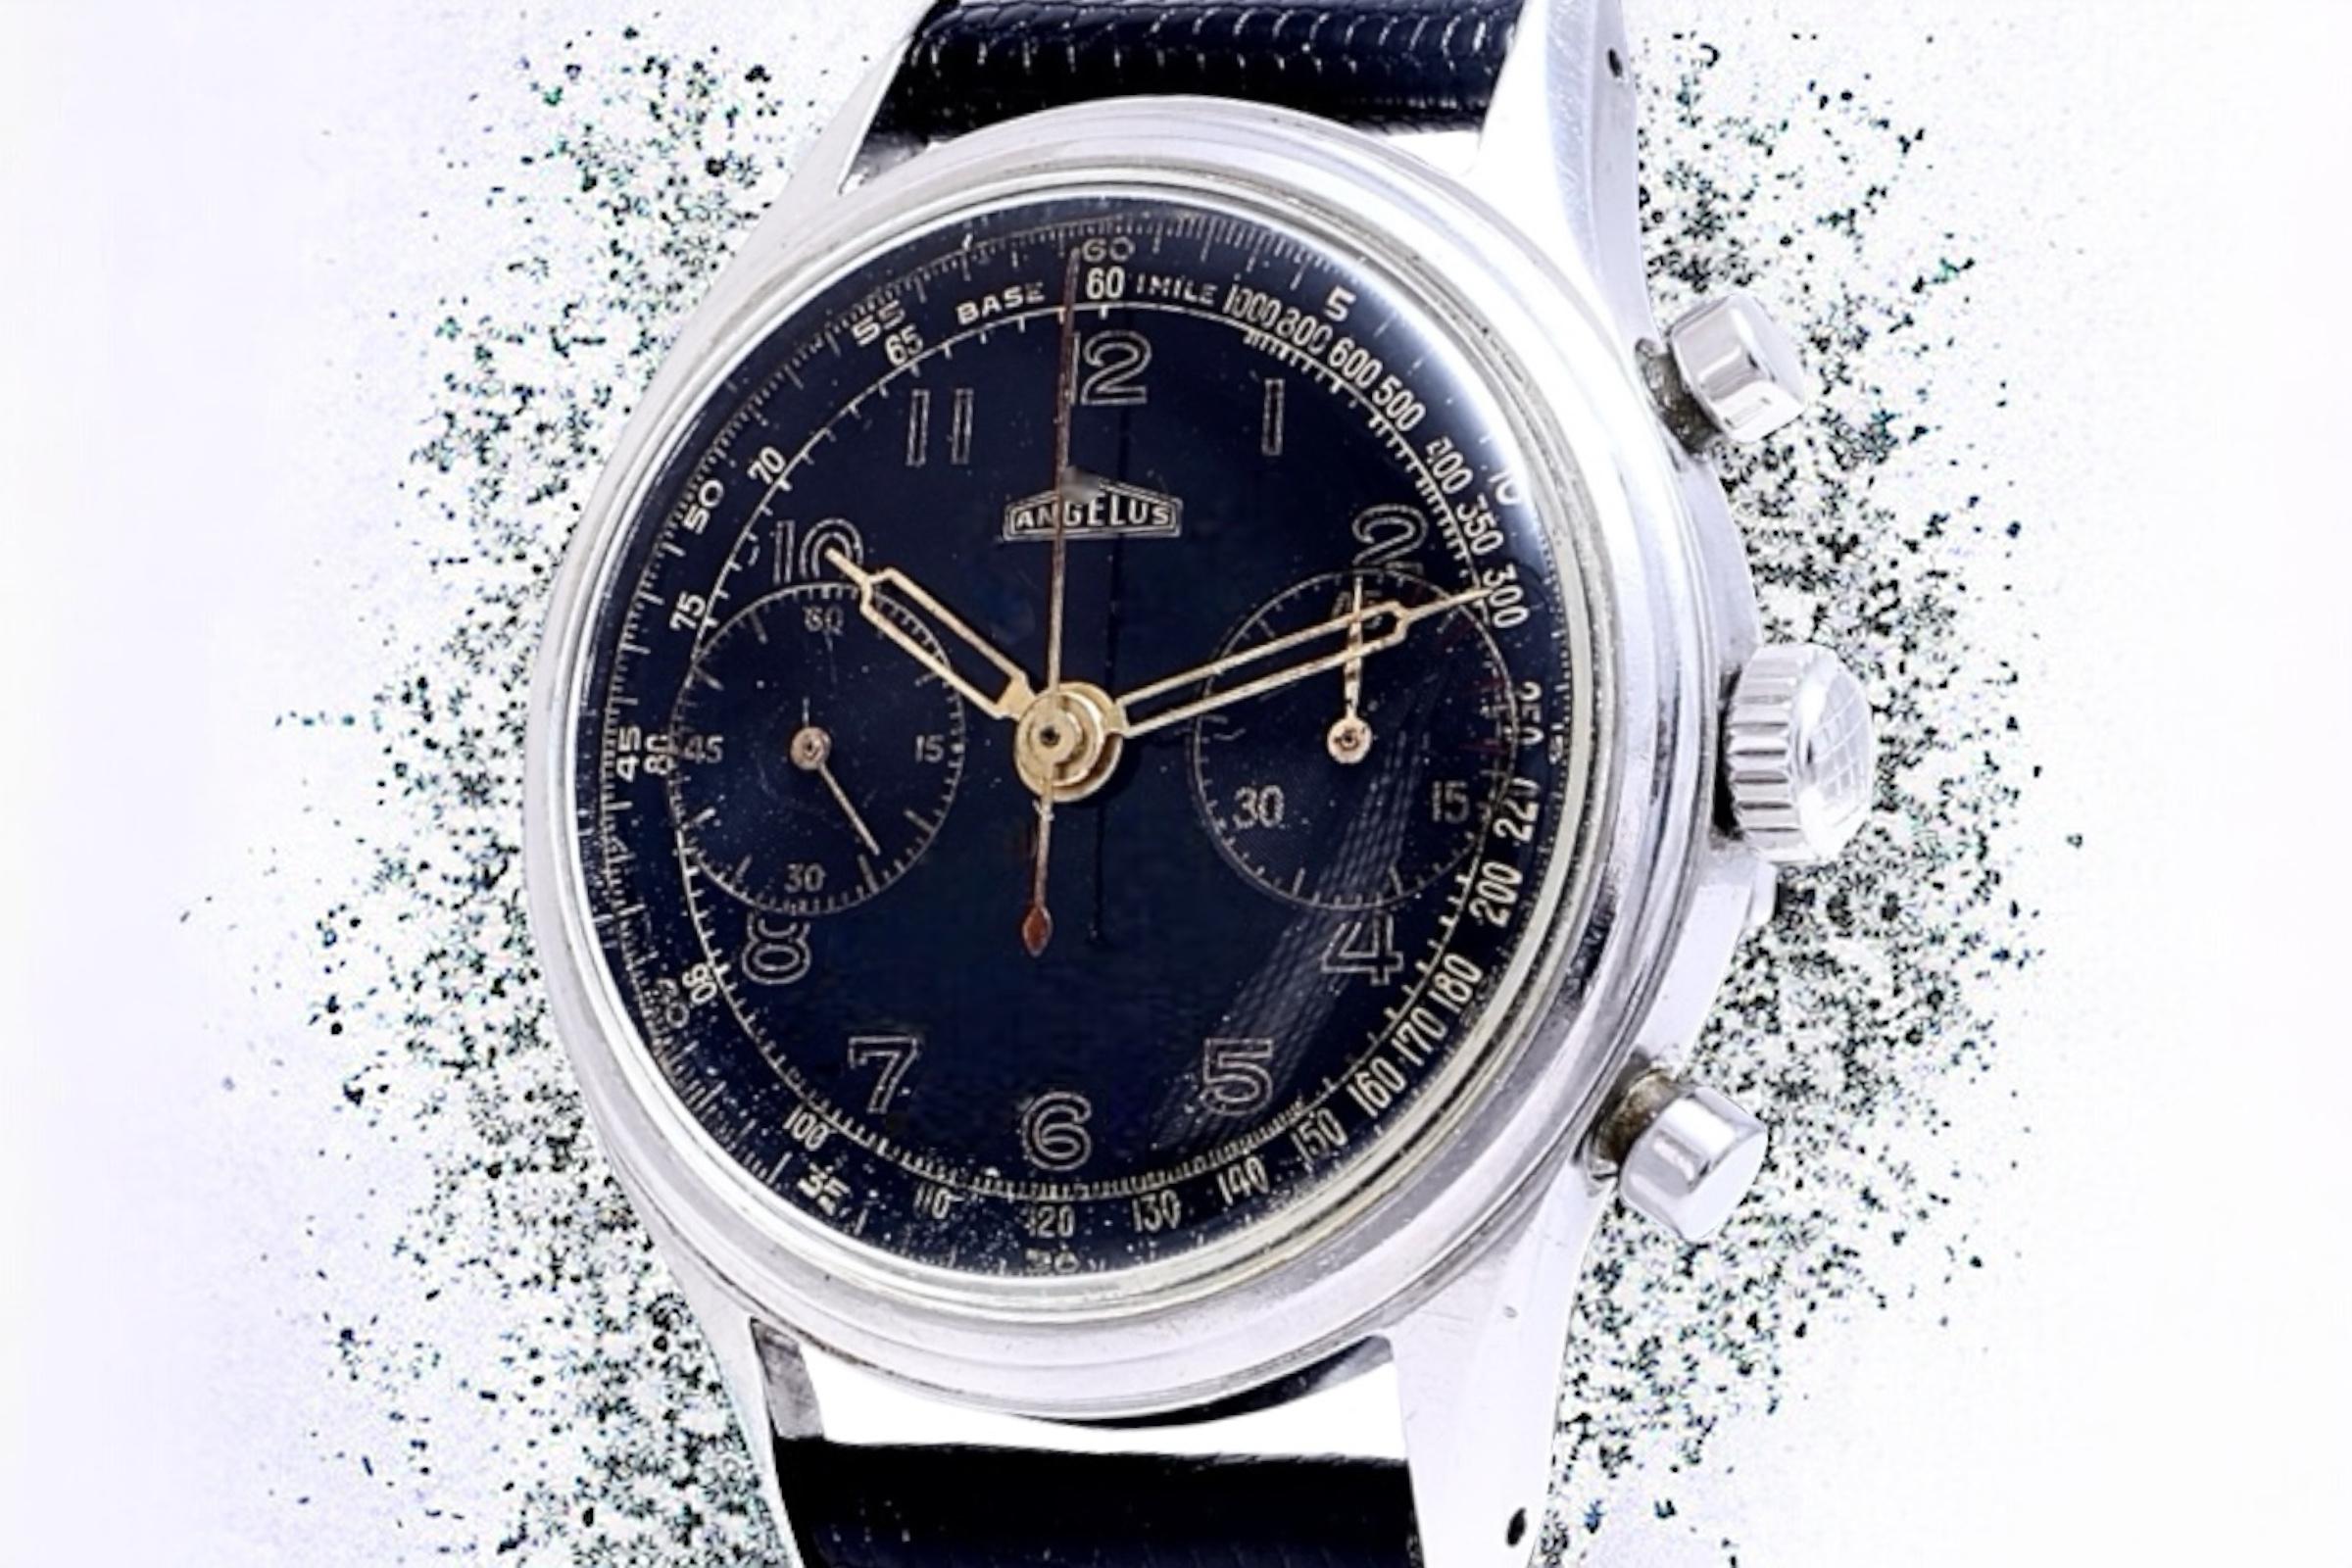 Steel Collectors Angelus Jumbo Chronograph Wrist Watch Gilt Dial For Sale 9